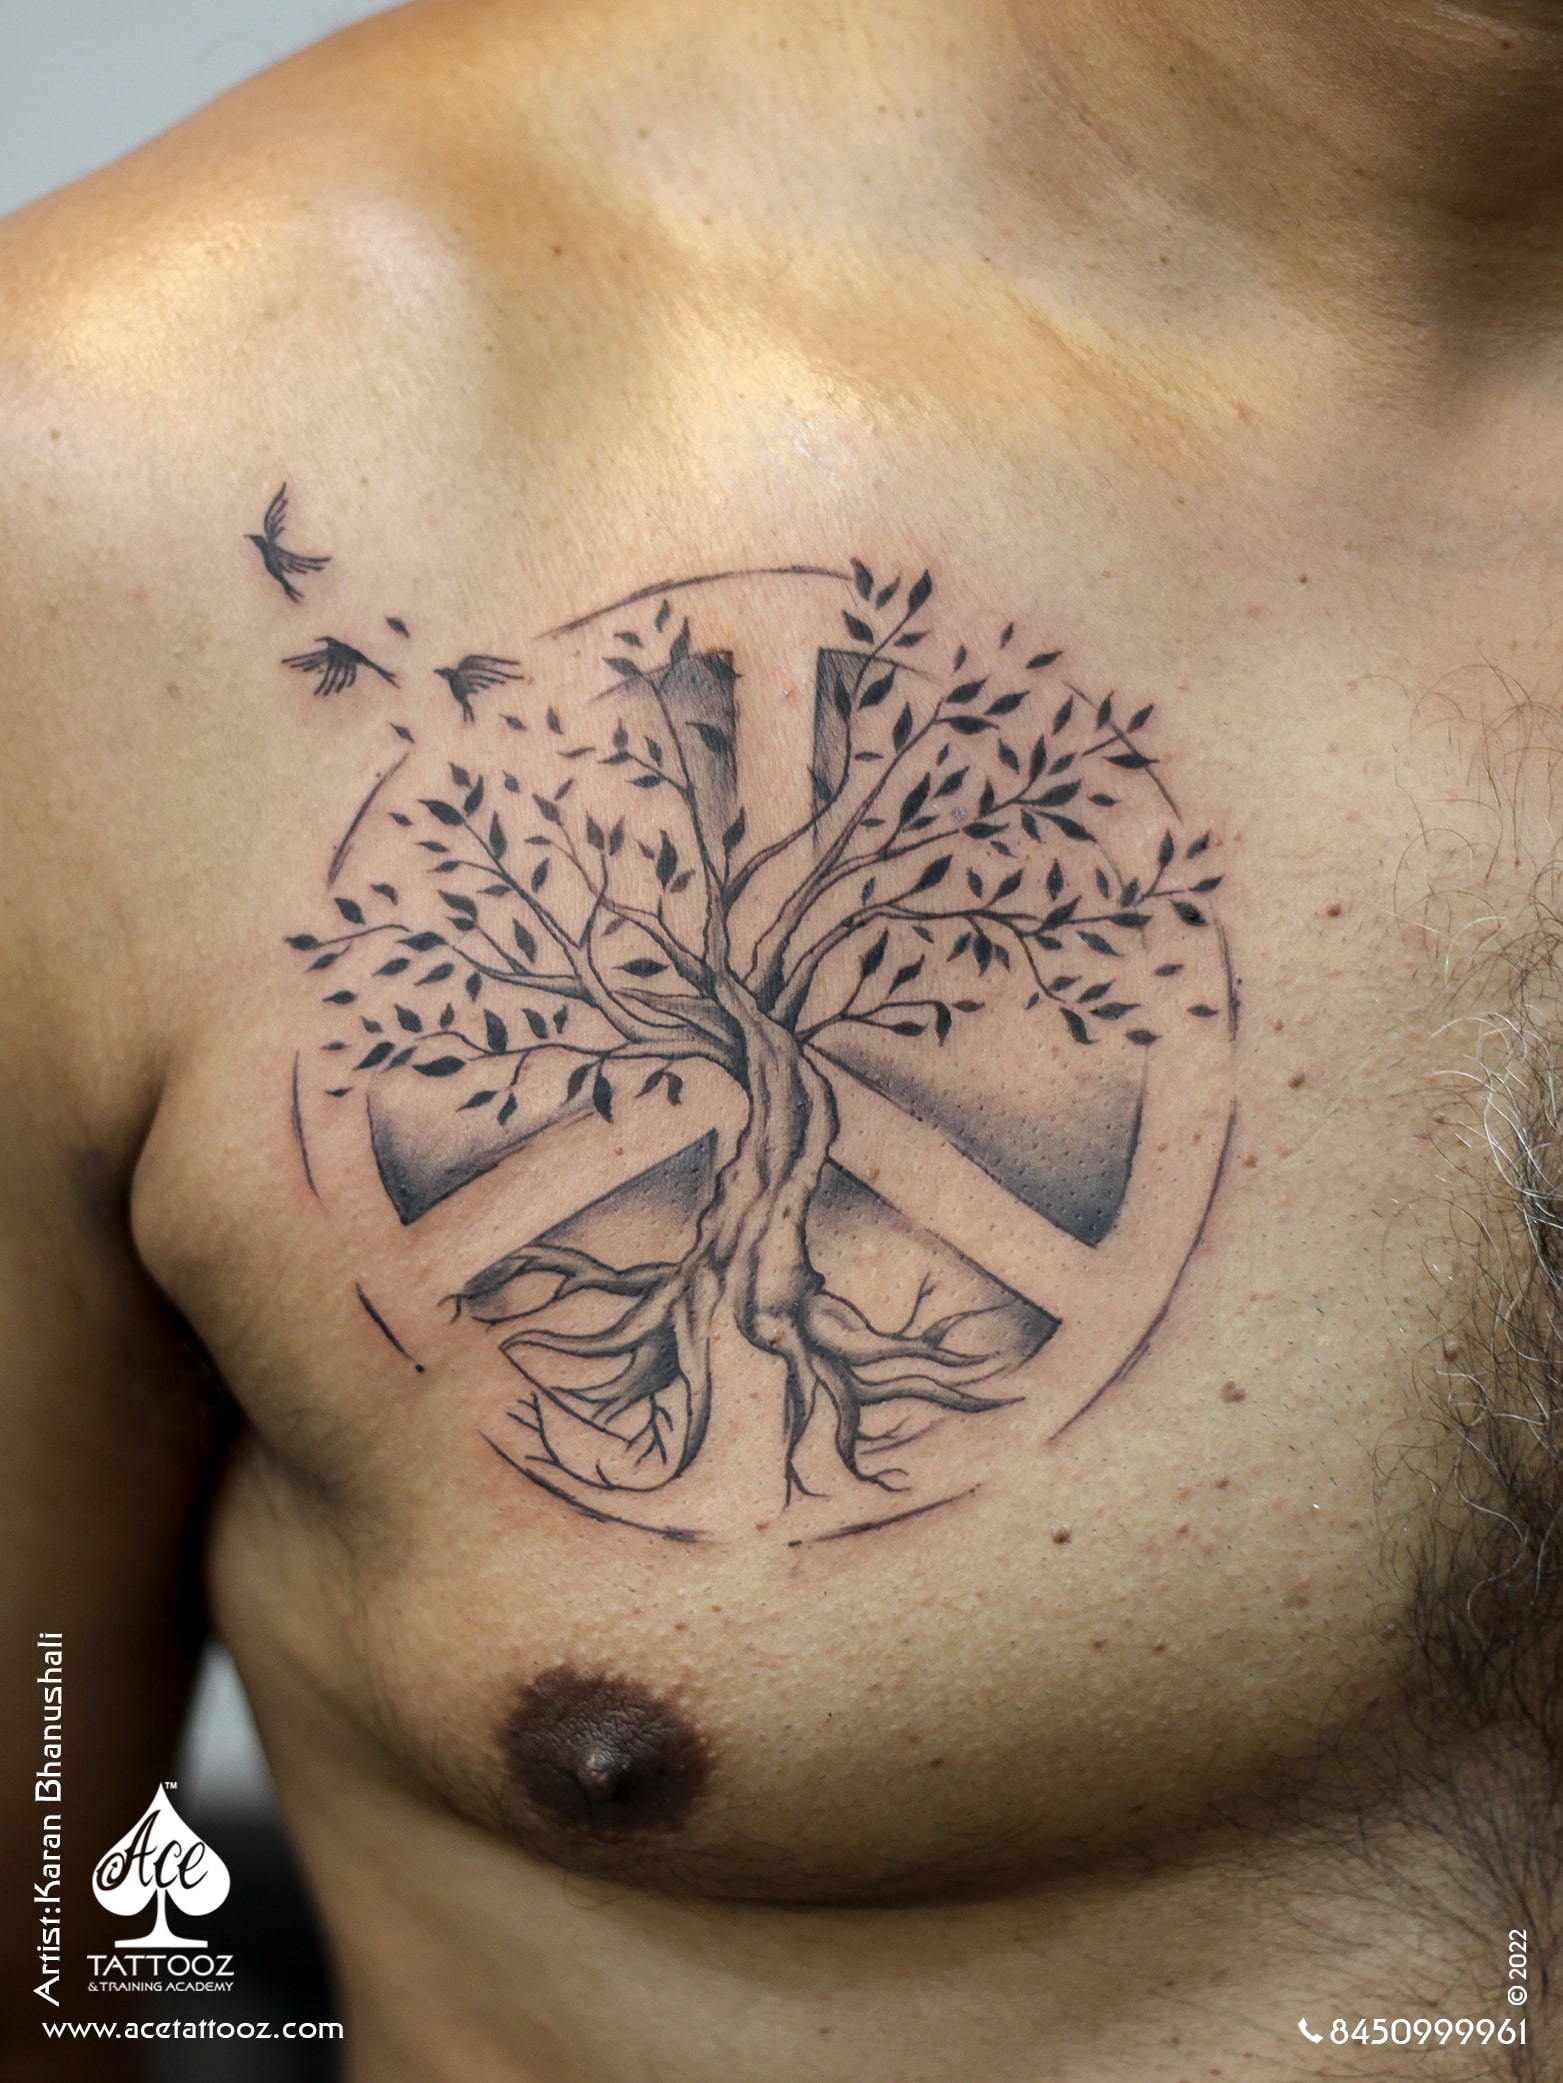 Tree and peace symbol tattoo - Ace Tattooz